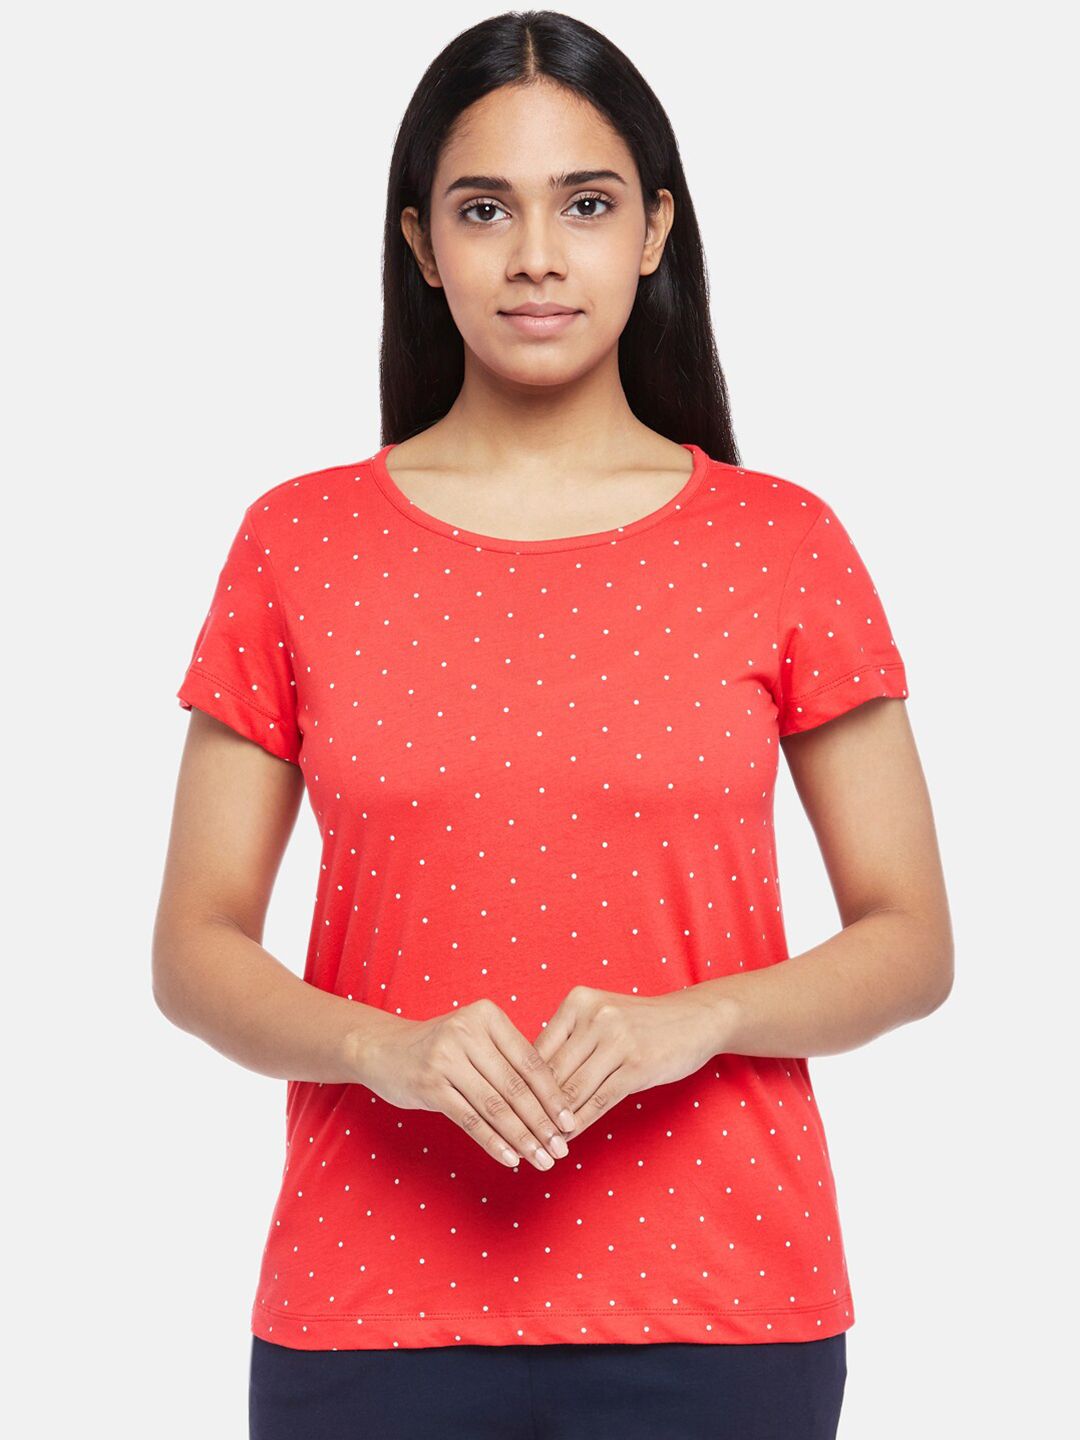 Dreamz by Pantaloons Women Red & White Printed Regular Lounge tshirt Price in India